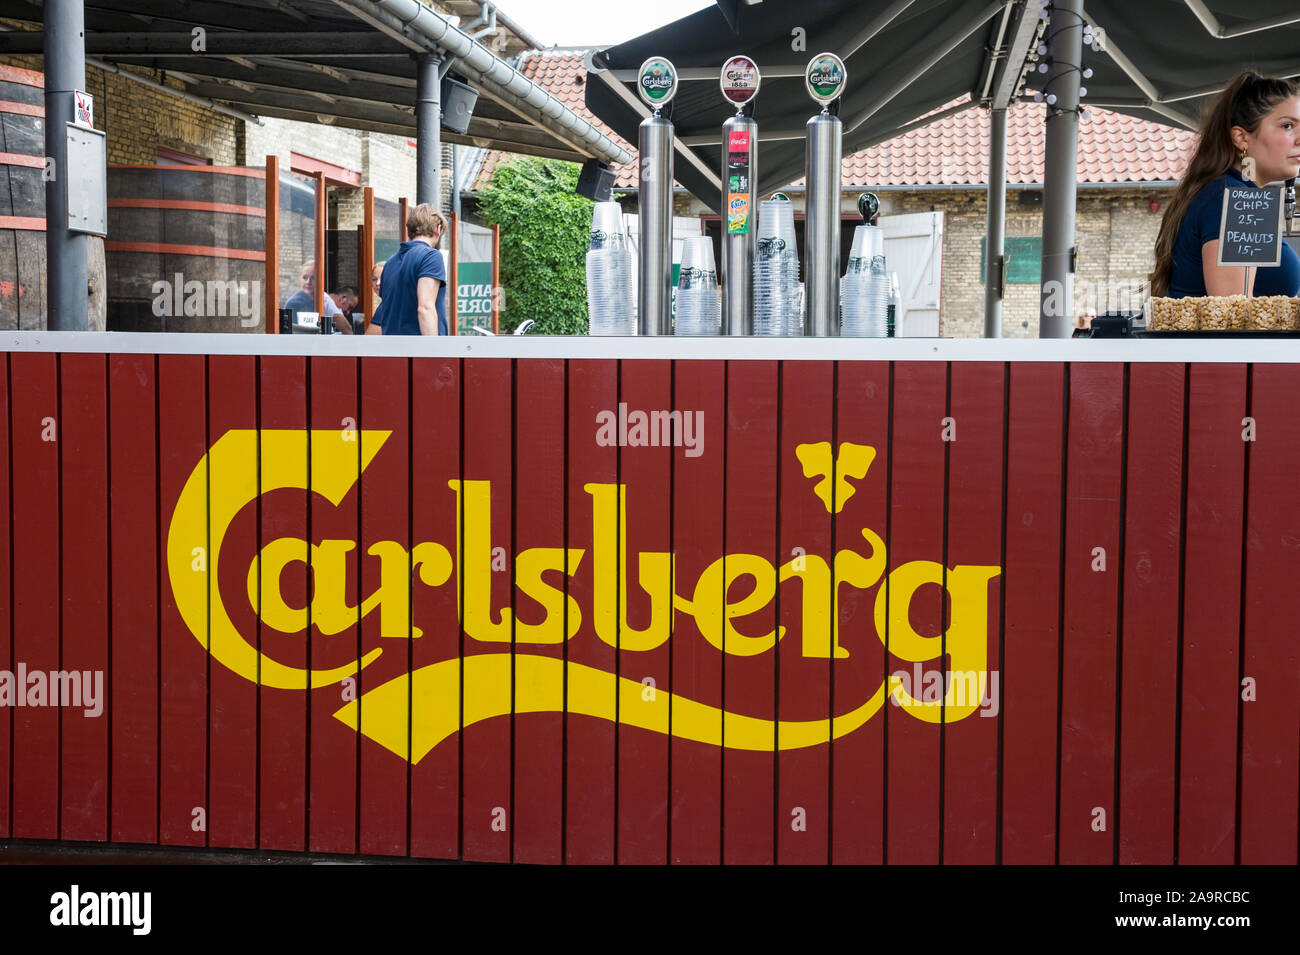 Beer pumps at the Carlsberg Brewery, Copenhagen, Denmark Stock Photo